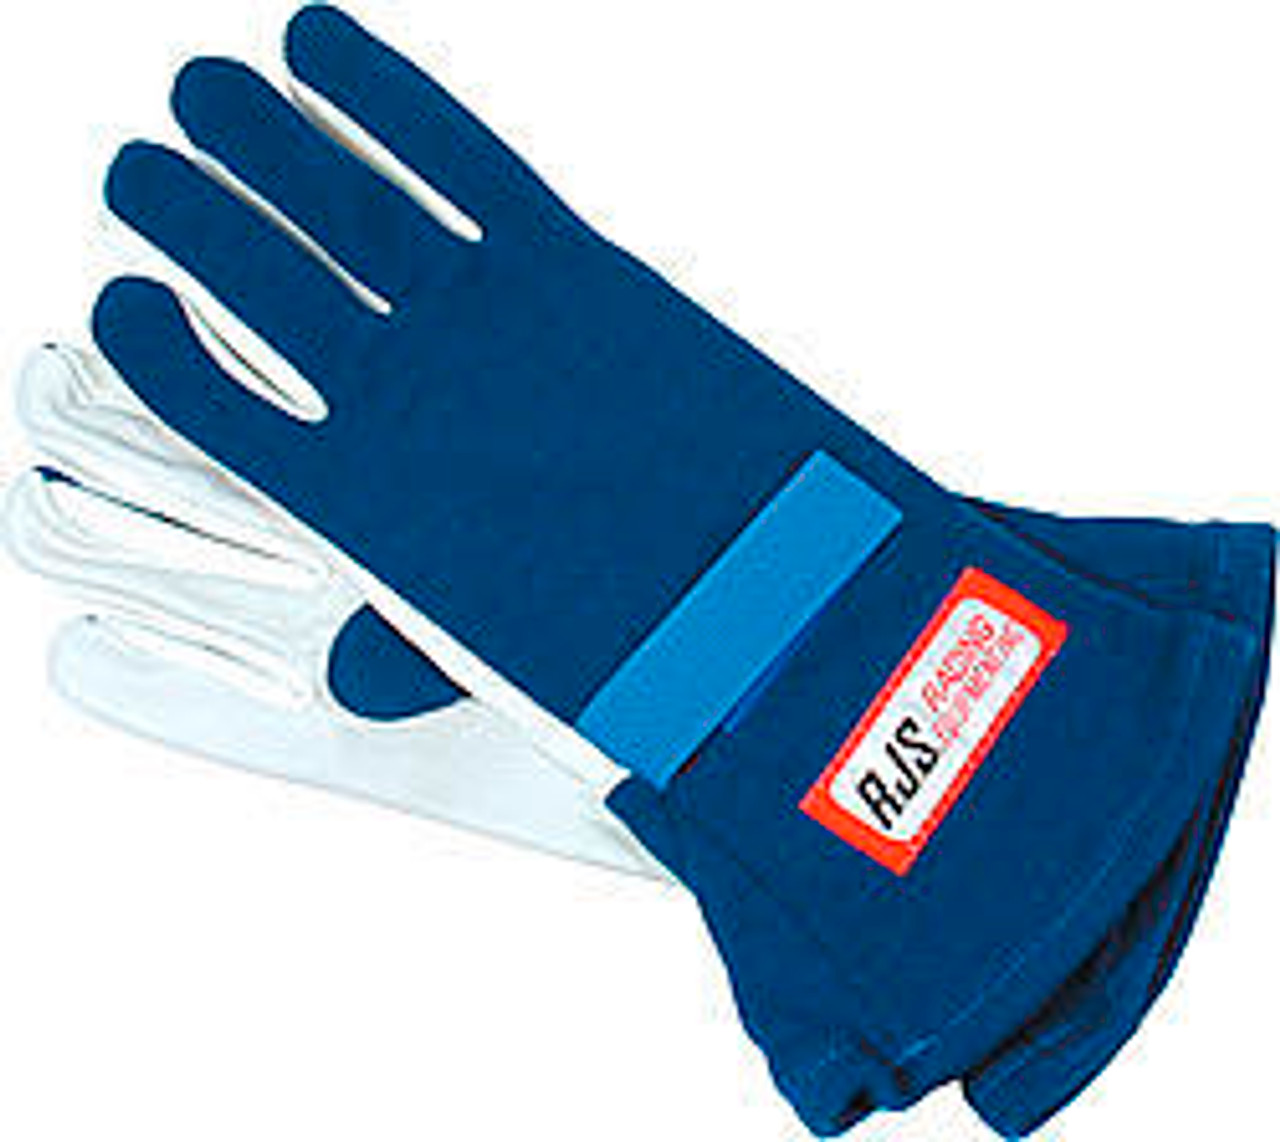 Gloves Nomex D/L XL Blue SFI-5 RJS600010306